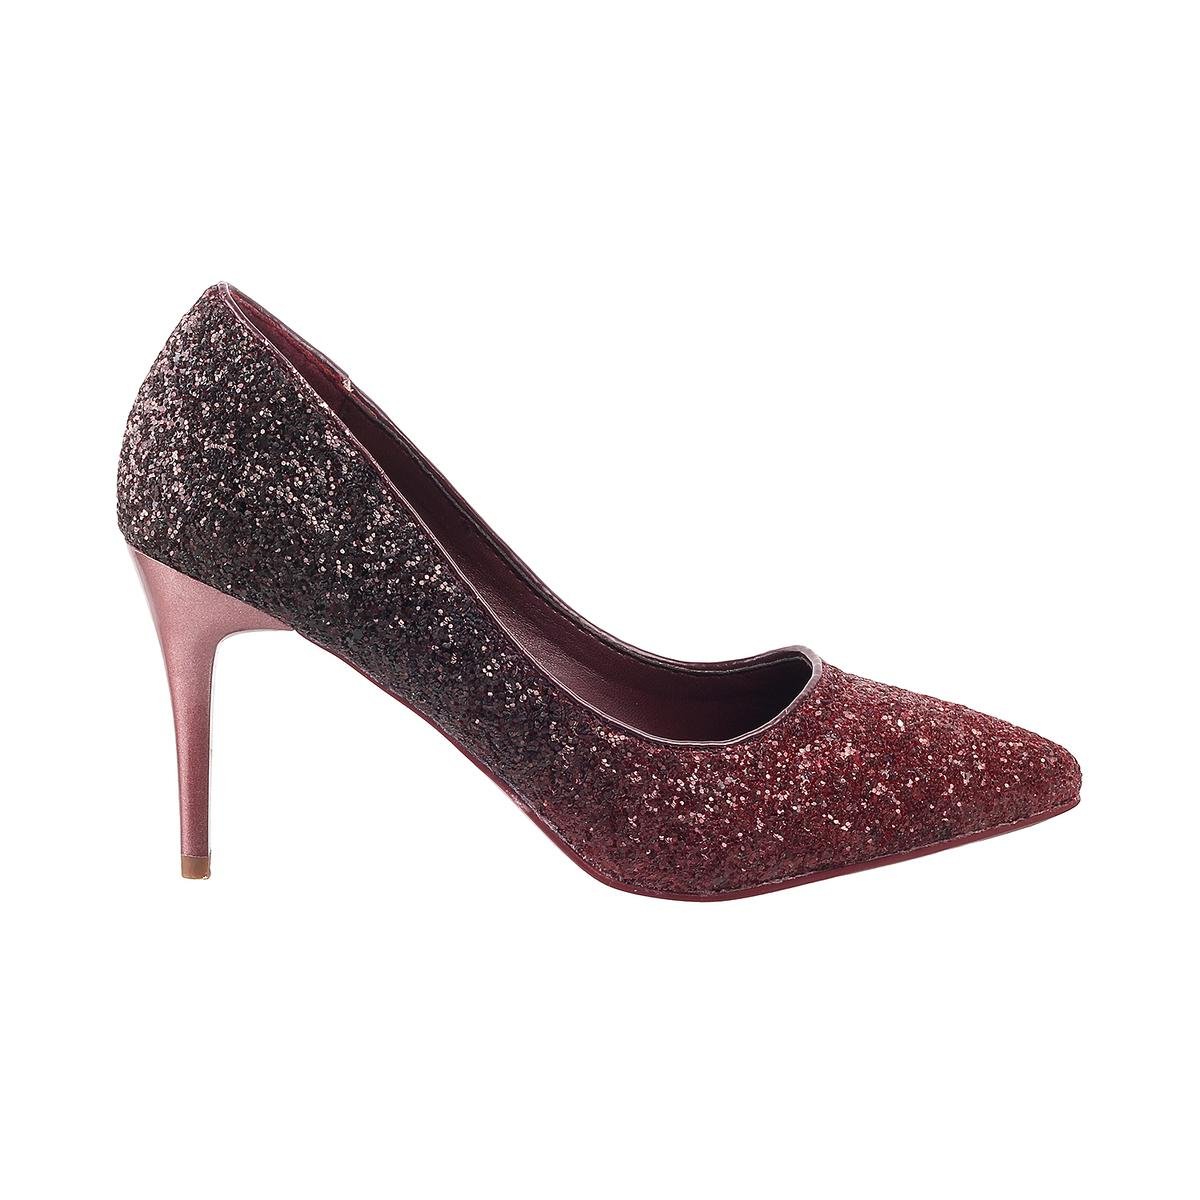 Pink glittery heels from M&S never worn - Depop